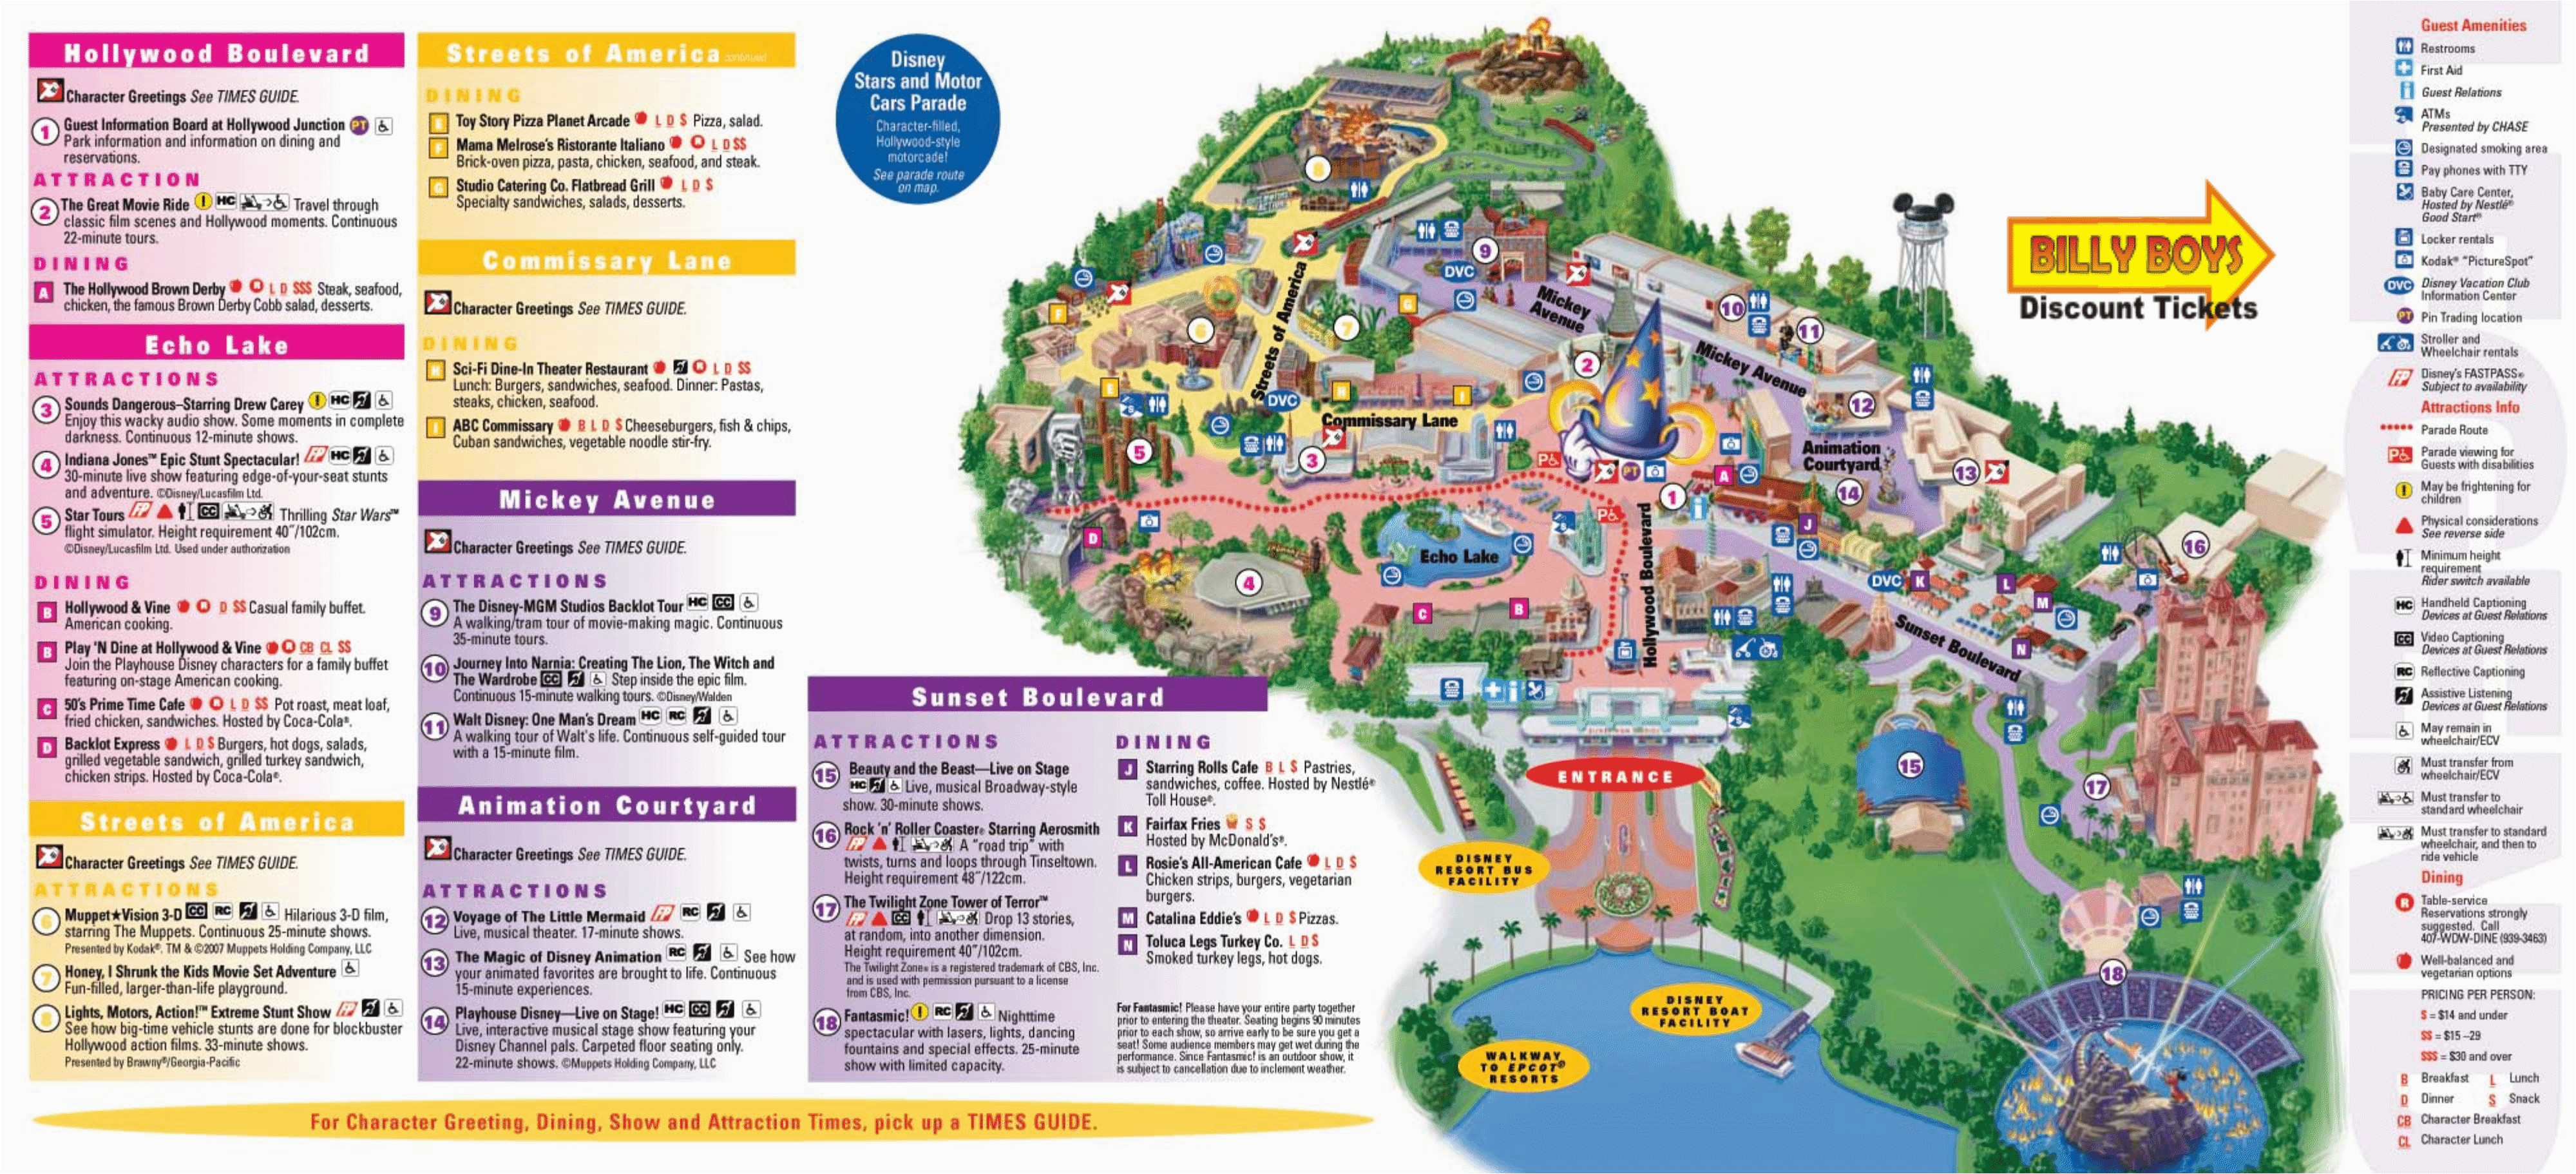 Universal Studios California Map Pdf Universal Studios Orlando Park Map Best Of Disney California Of Universal Studios California Map Pdf 